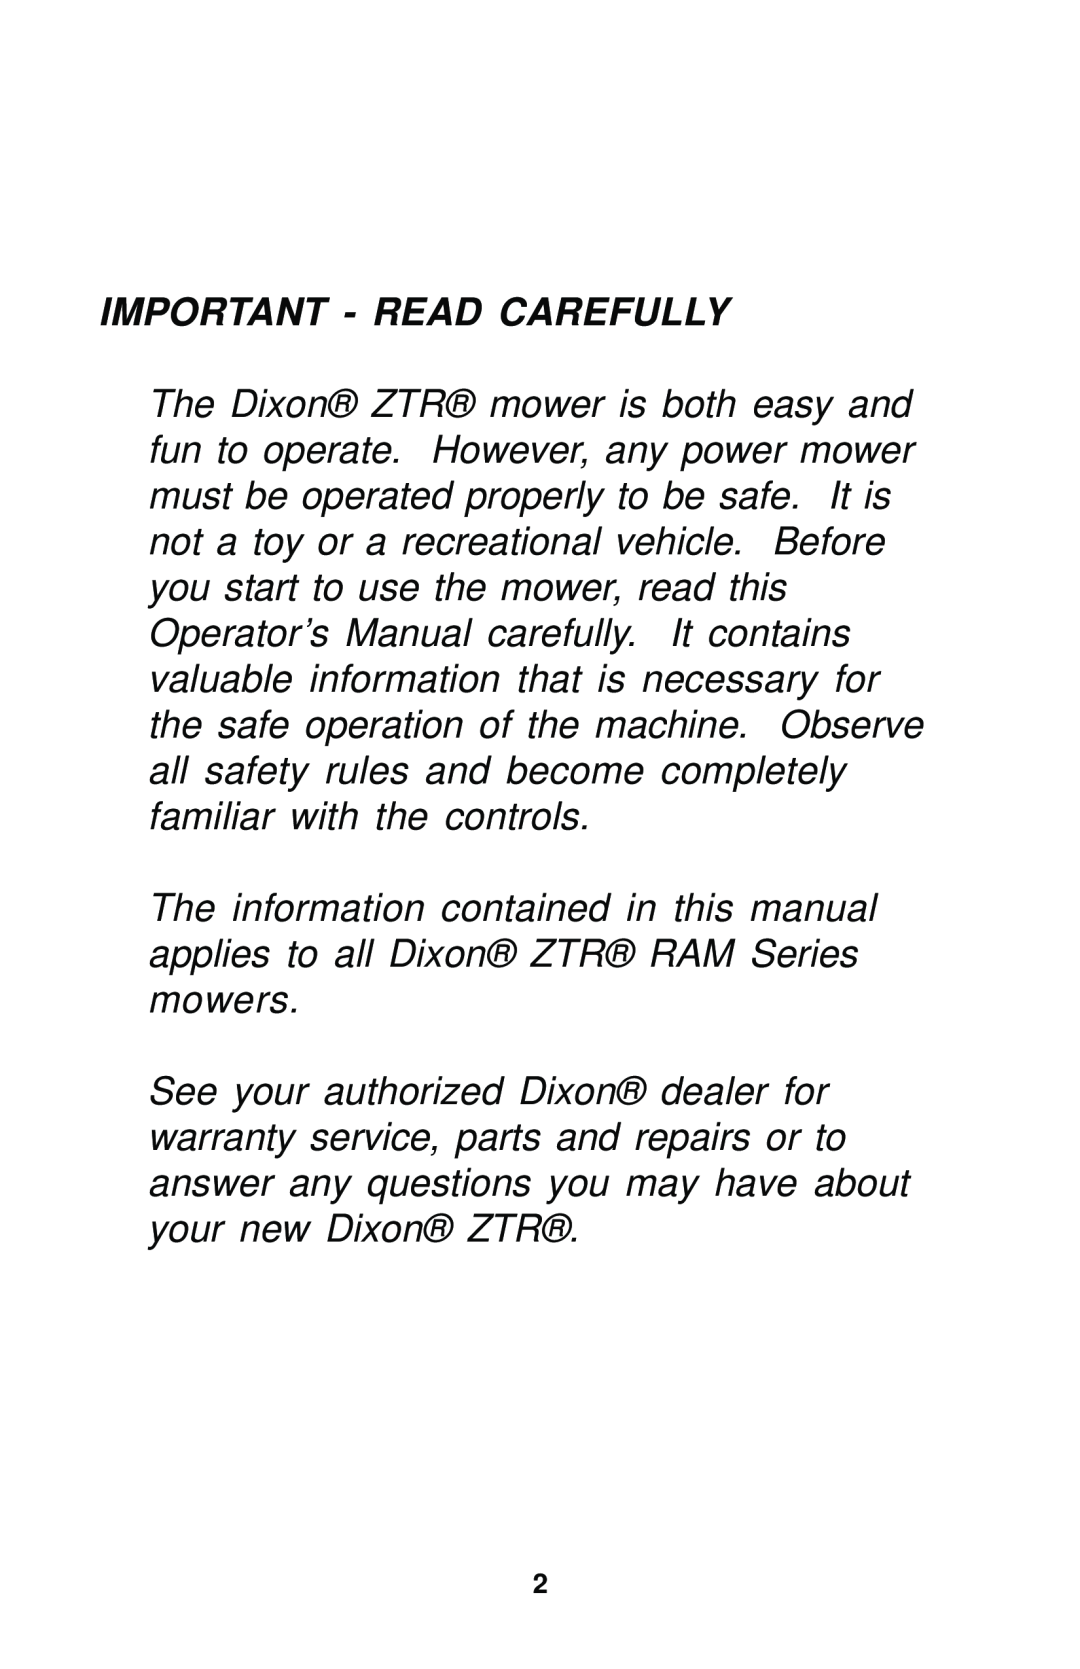 Dixon 17823-0704 manual Important - Read Carefully 